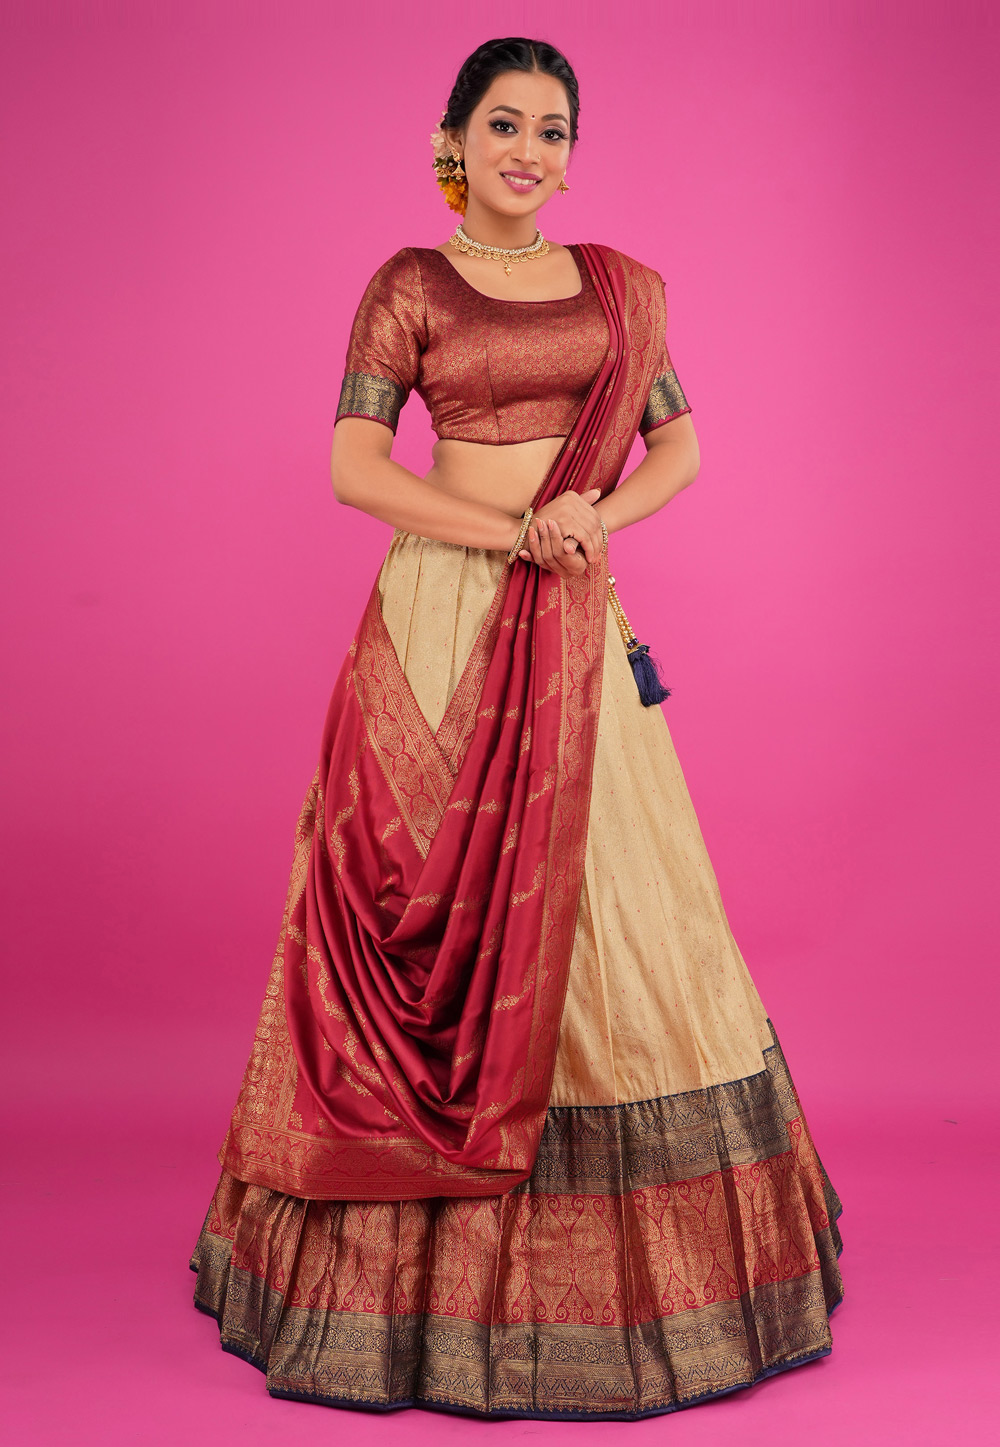 Multi Color Beautiful Lehenga Banarasi Silk Designing Choli Half Saree  Modern | eBay